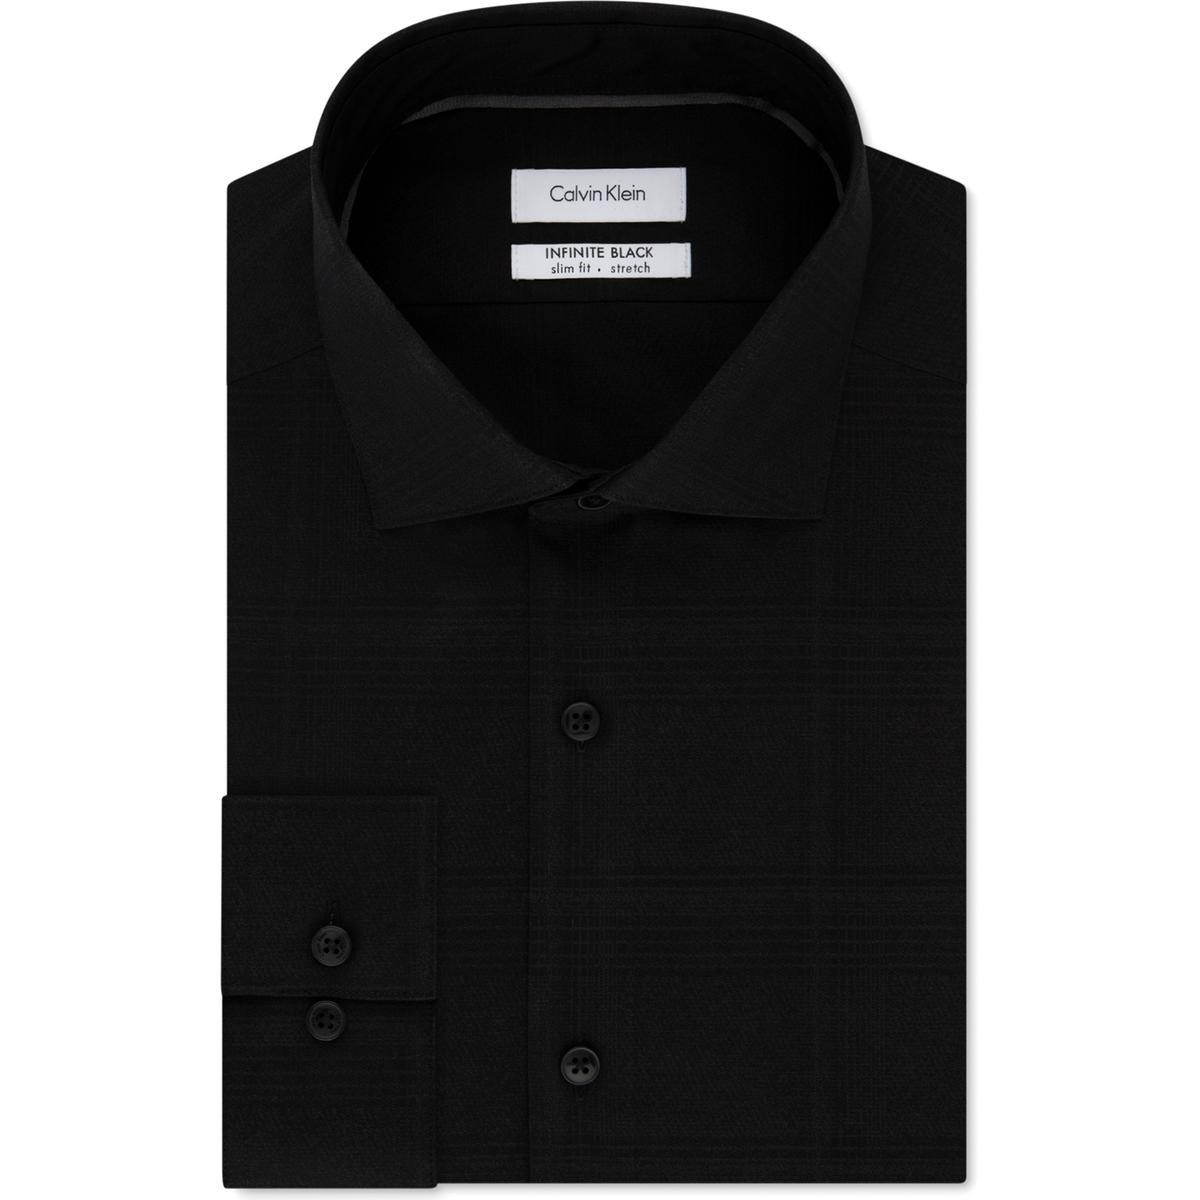 Calvin Klein Mens Black Slim Fit Non-iron Dress Shirt 16 34/35 BHFO